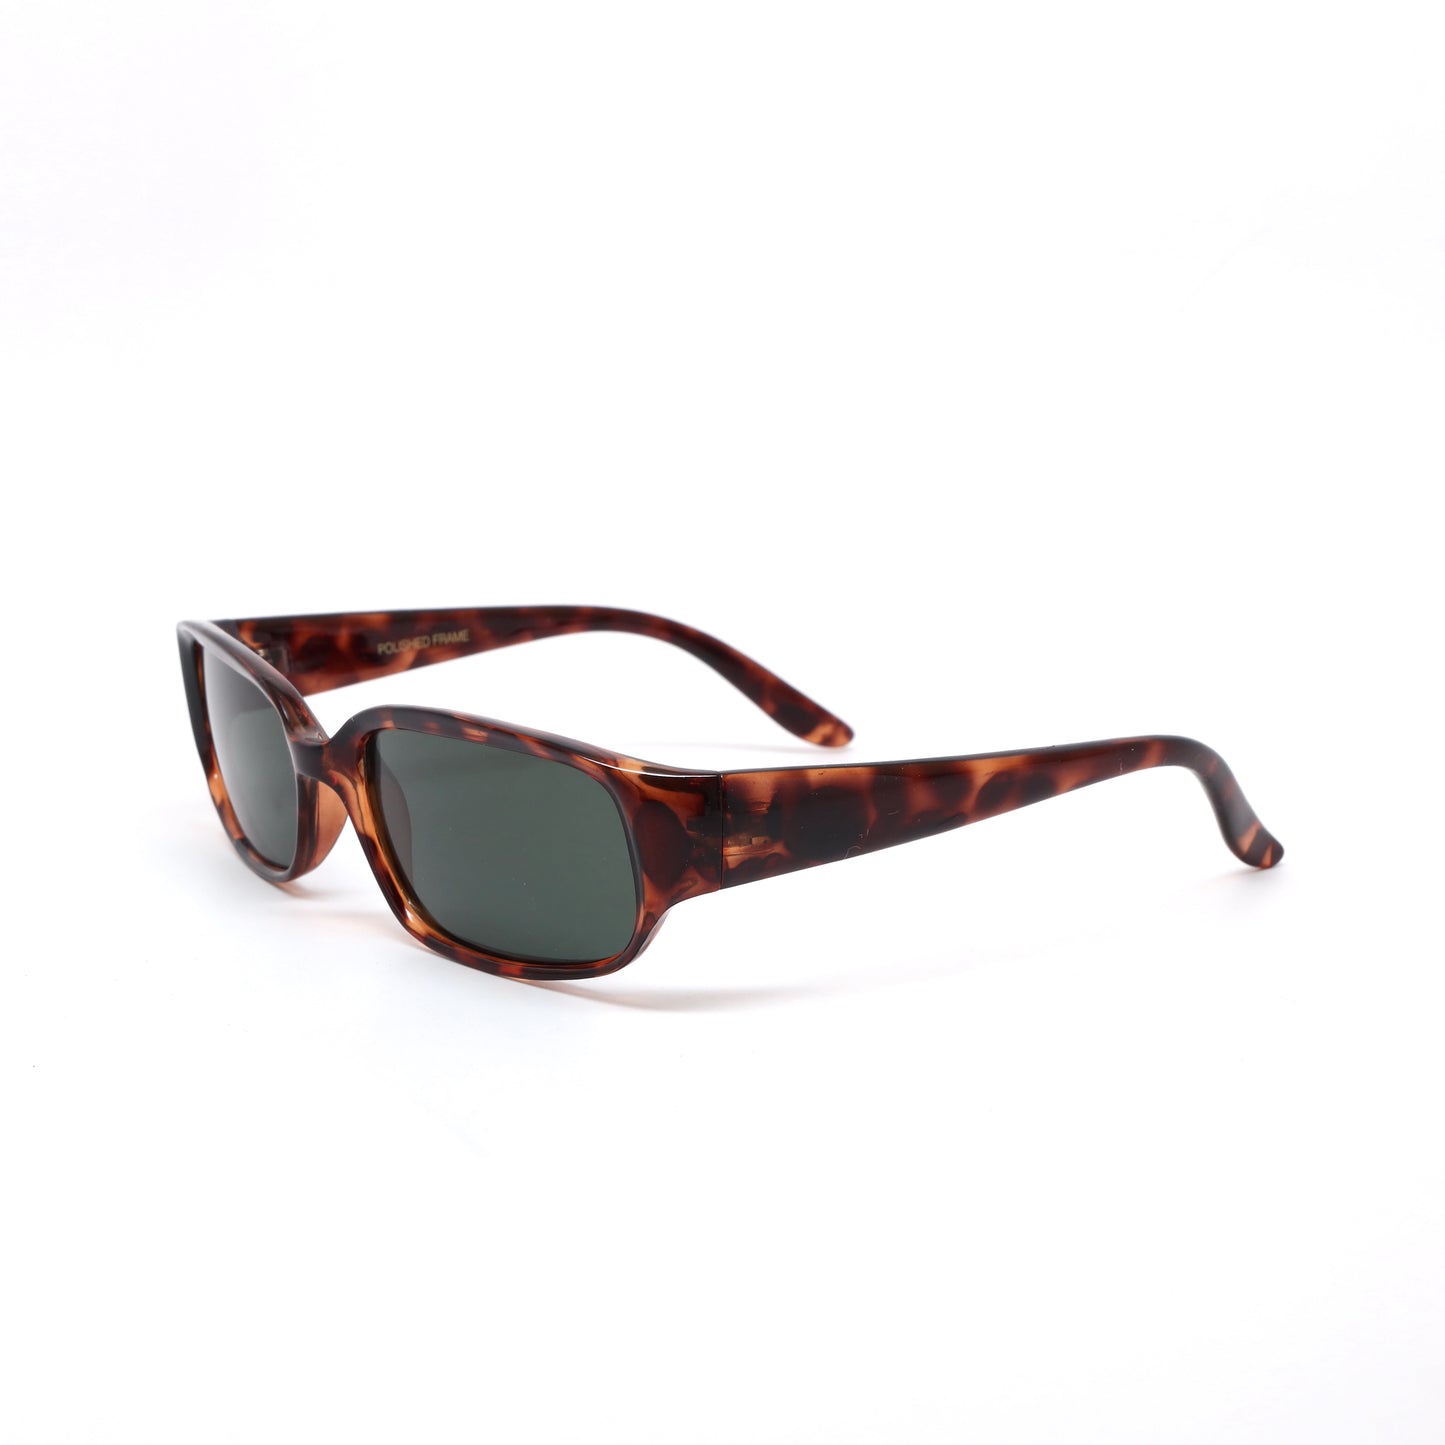 Vintage Standard Size Rectangle Frame Sunglasses - Tortoise